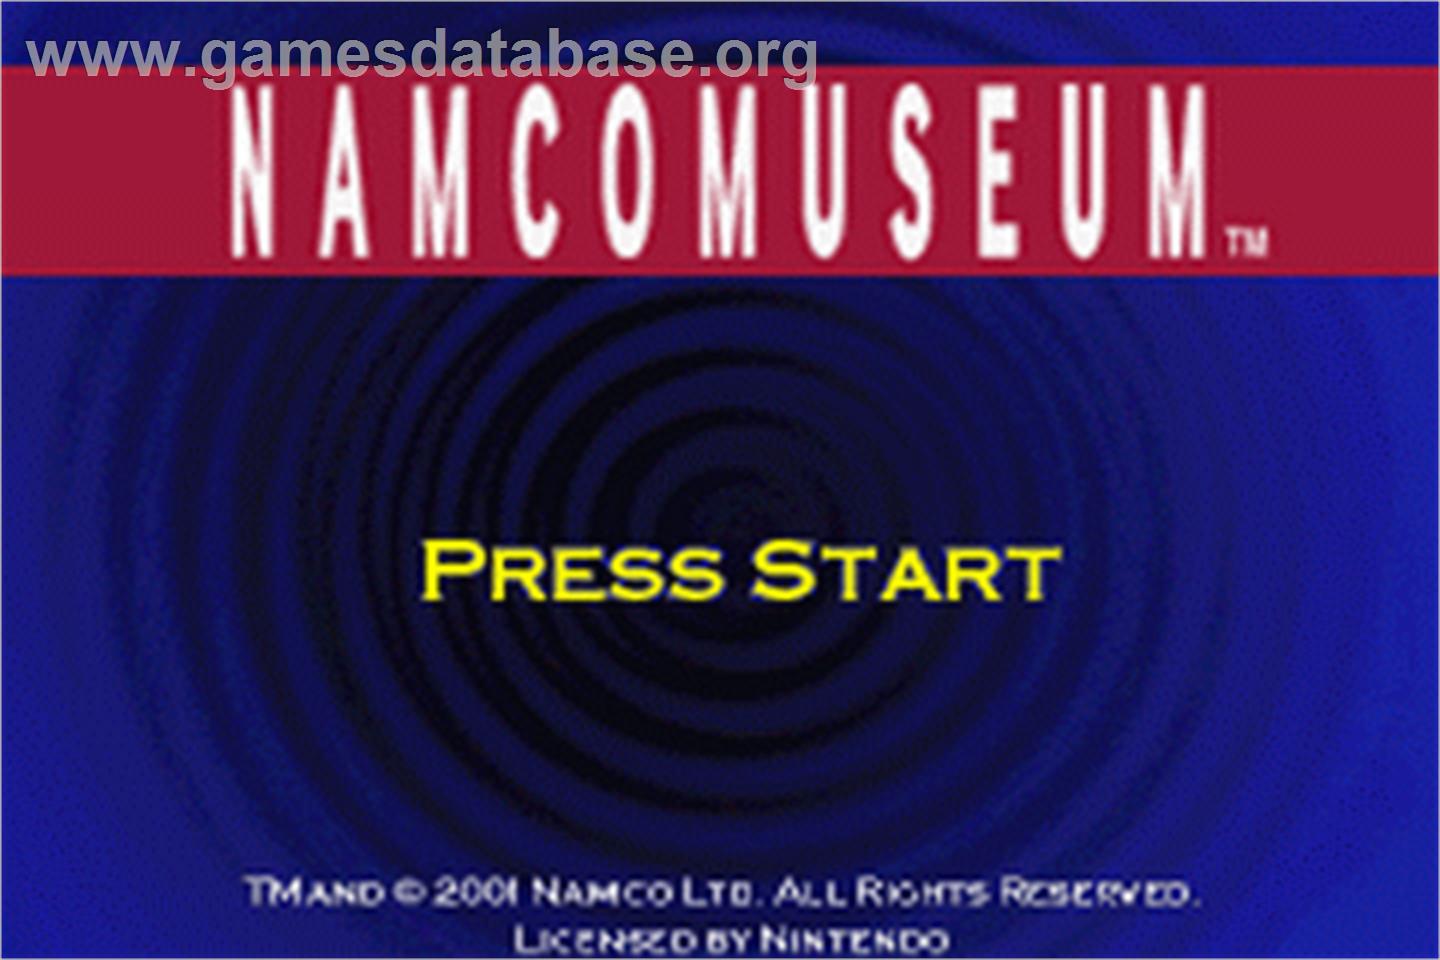 Namco Museum - Nintendo Game Boy Advance - Artwork - Title Screen